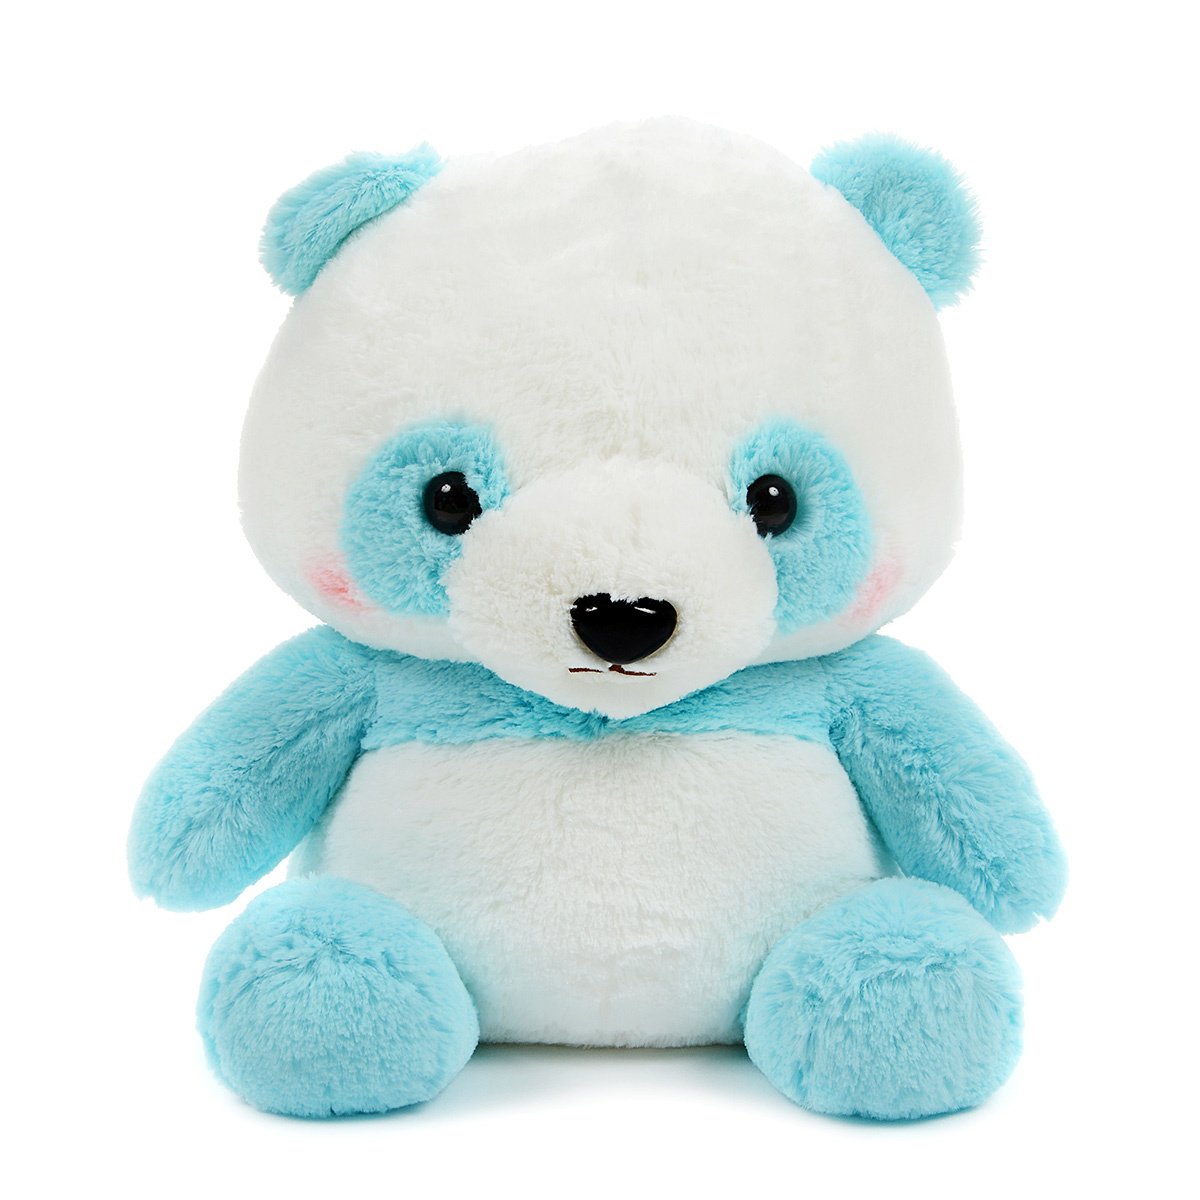 Plush Panda, Amuse, Honwaka Panda Baby, Yume Soda, White / Blue, 16 Inches BIG Size